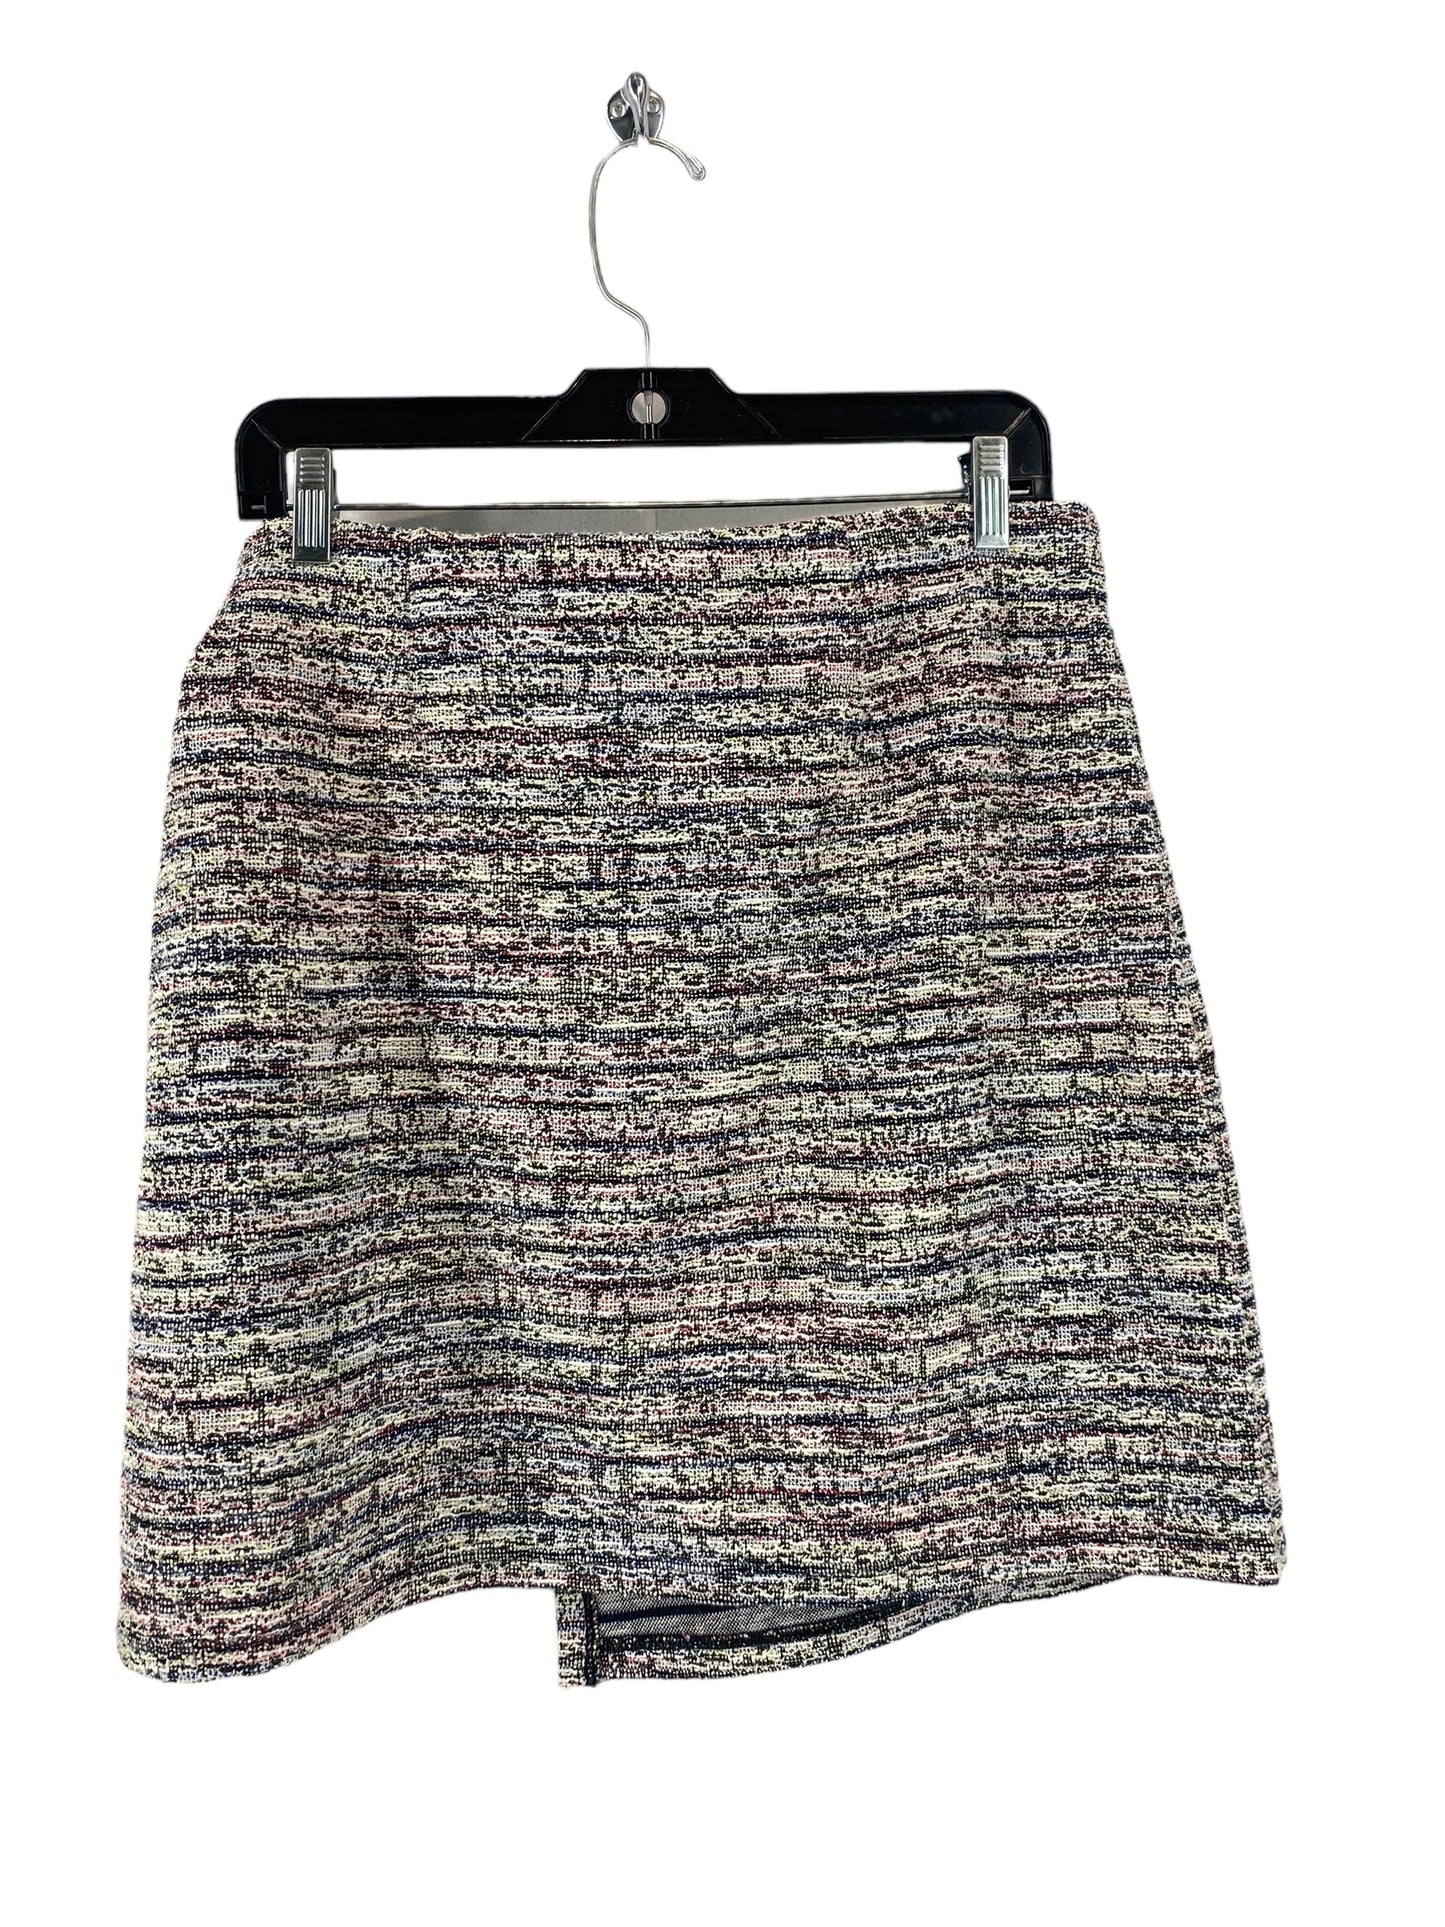 Skirt Midi By Loft  Size: M